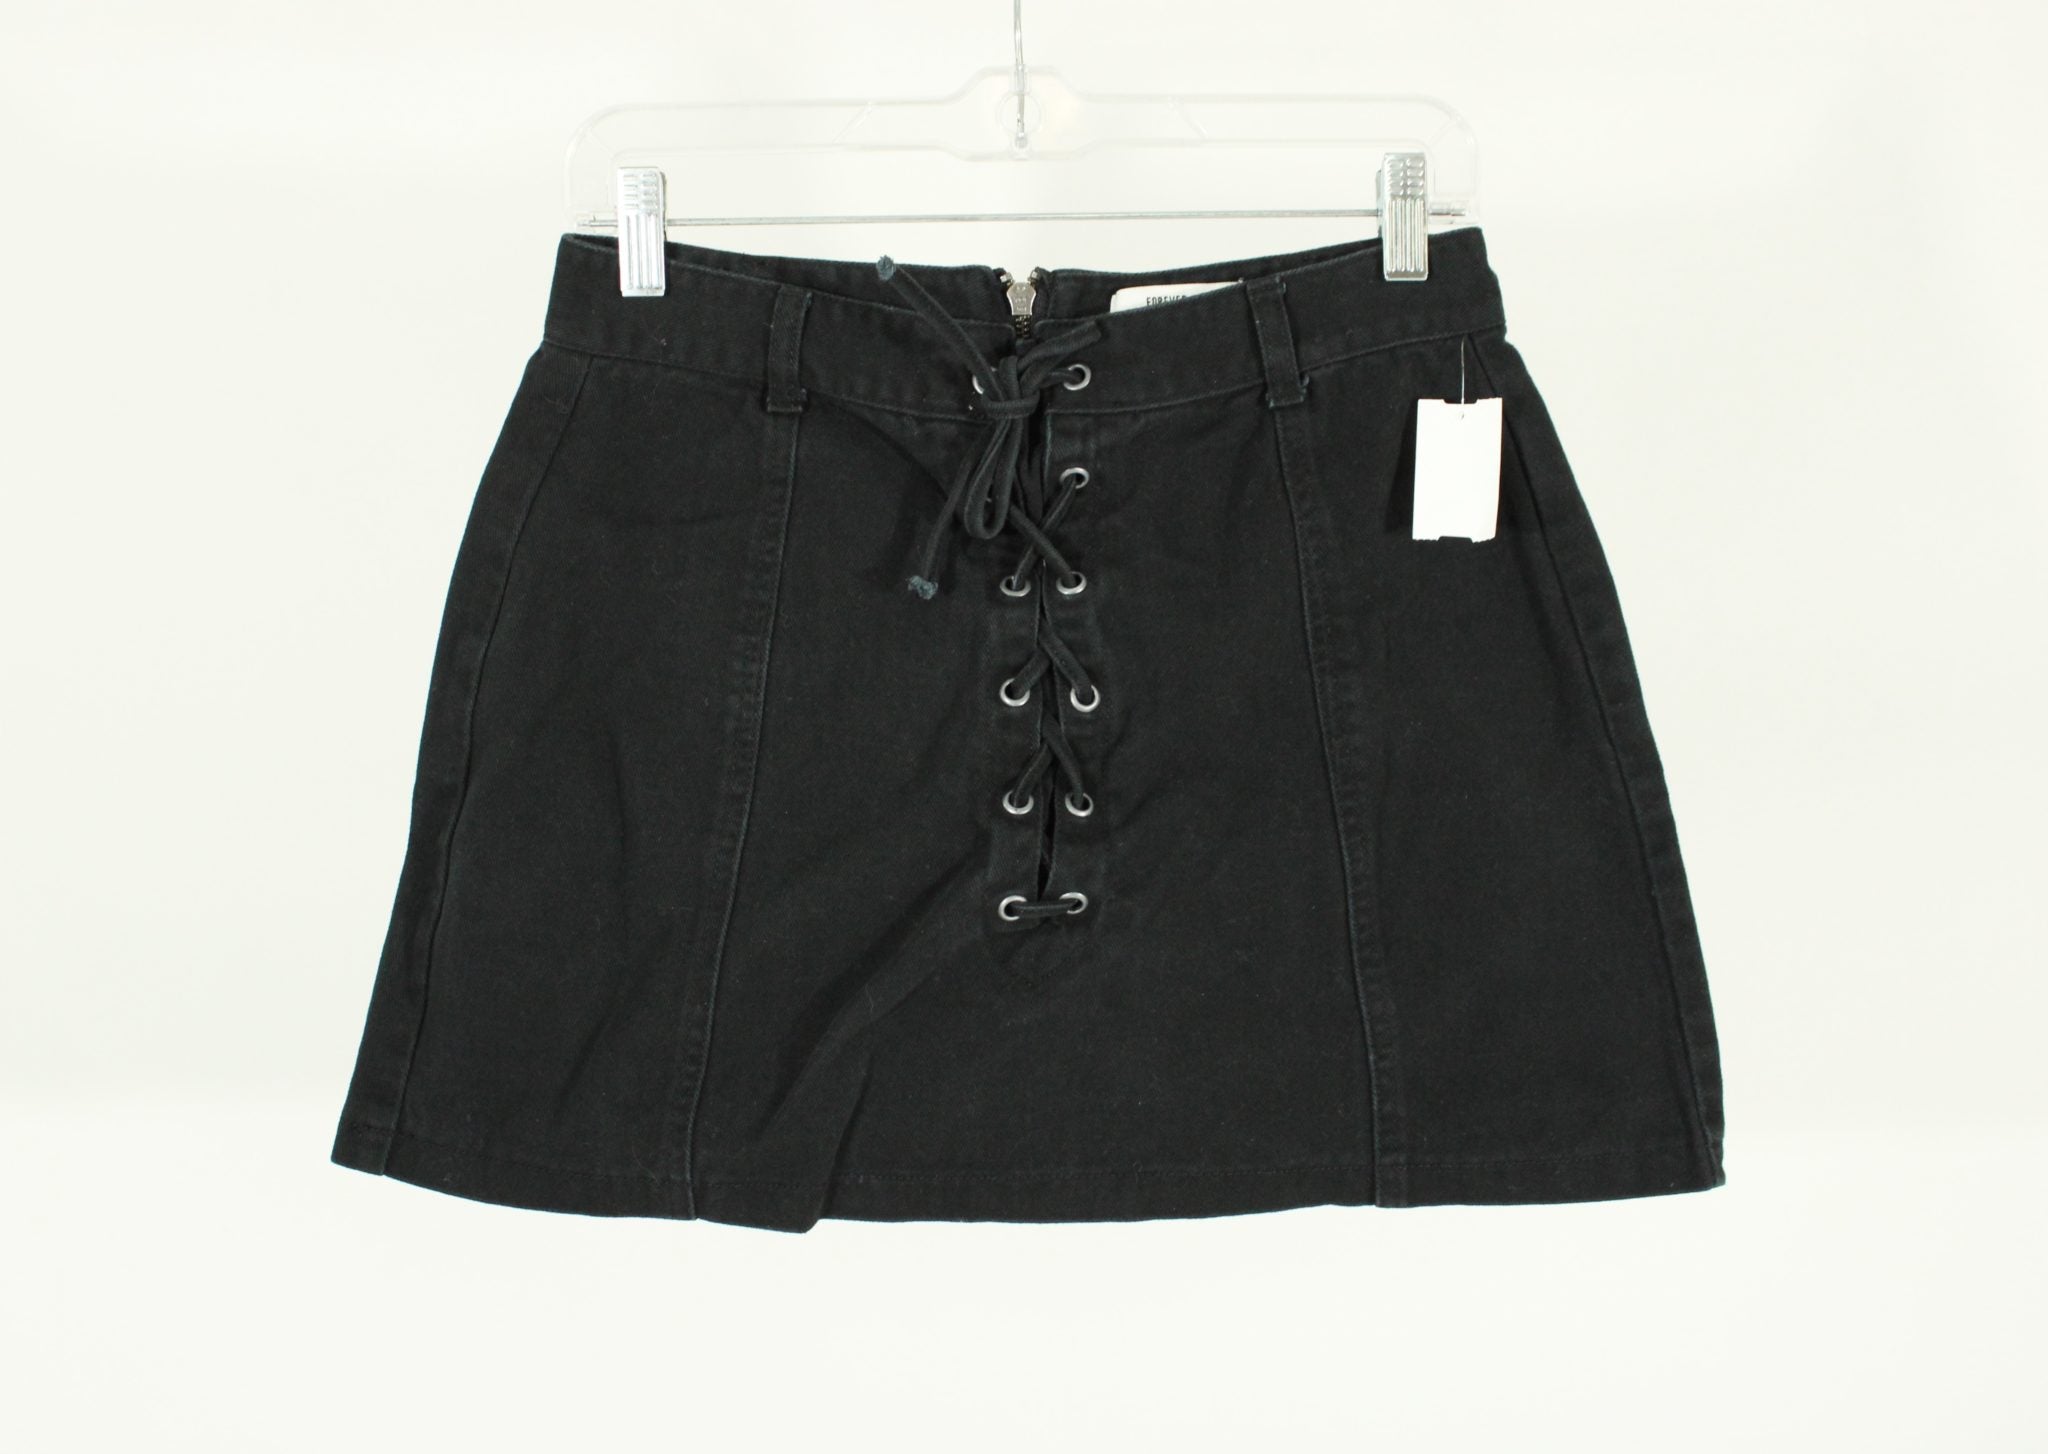 Forever 21 Los Angeles Black Lace Up Denim Skirt | Size 29 (8)